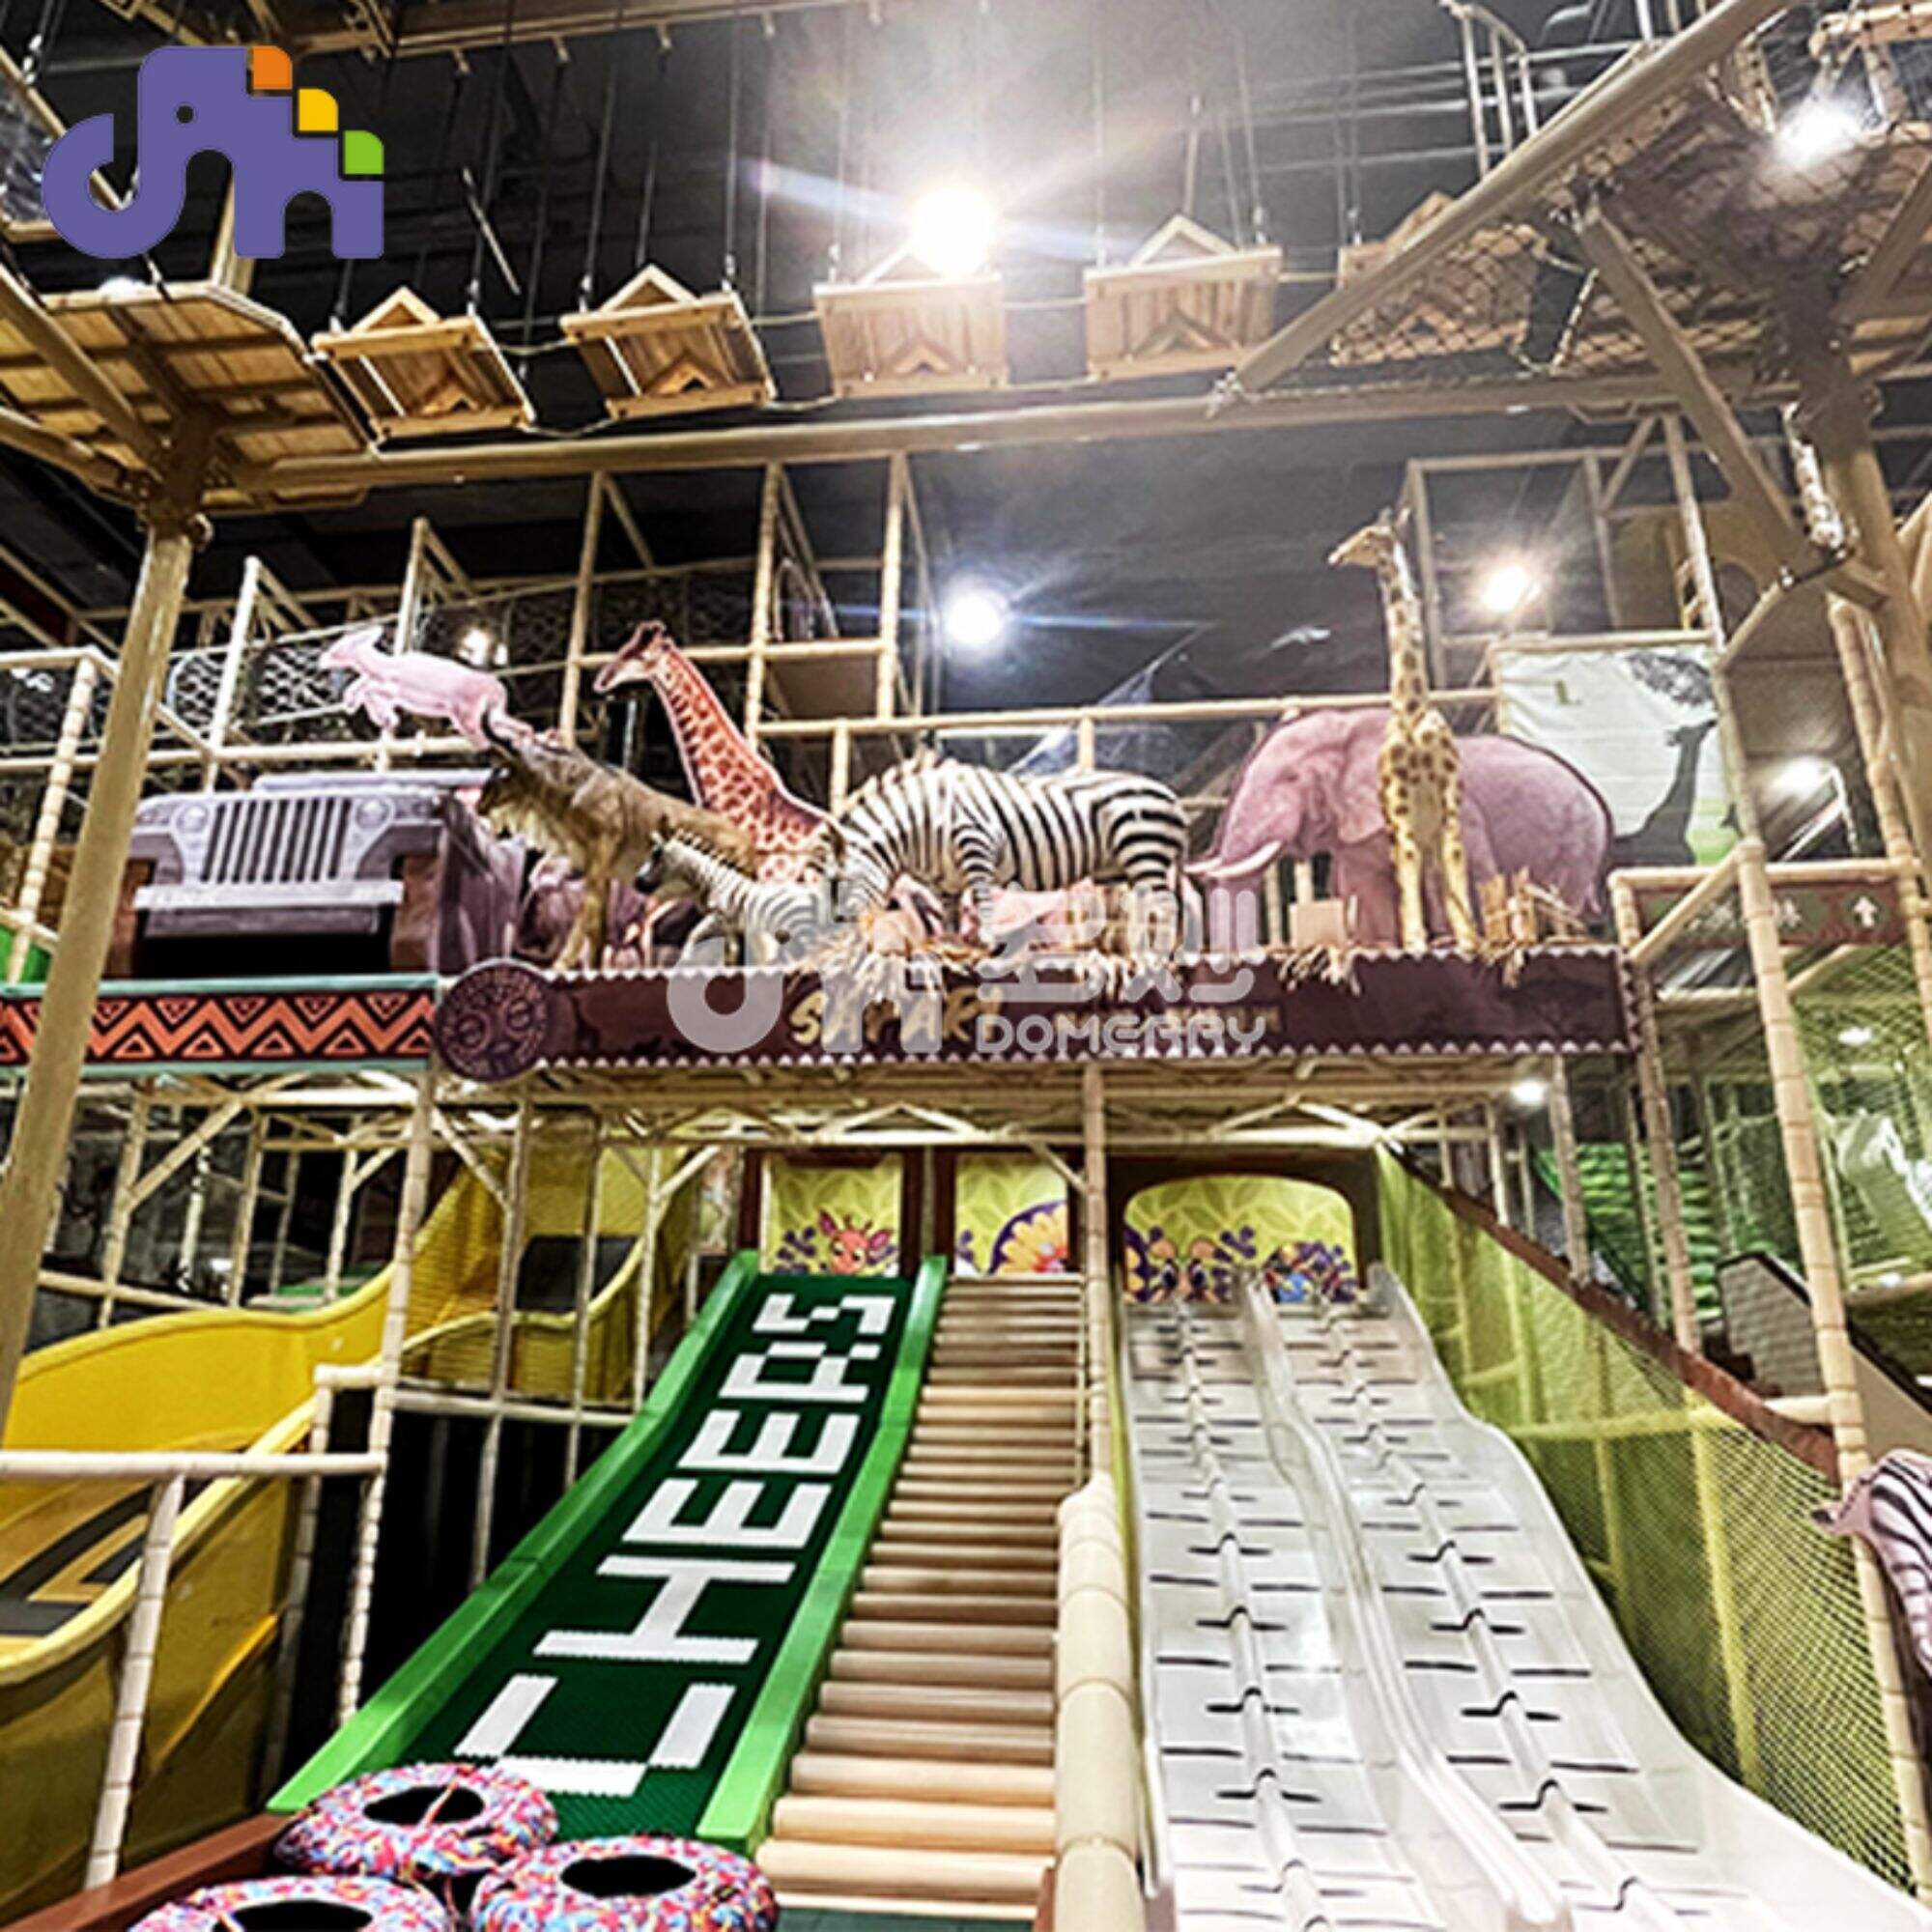 Domerry Safari Jungle Theme Εσωτερικός εξοπλισμός παιδικής χαράς Εκπαιδευτική ζώνη με τσουλήθρες για παιδιά